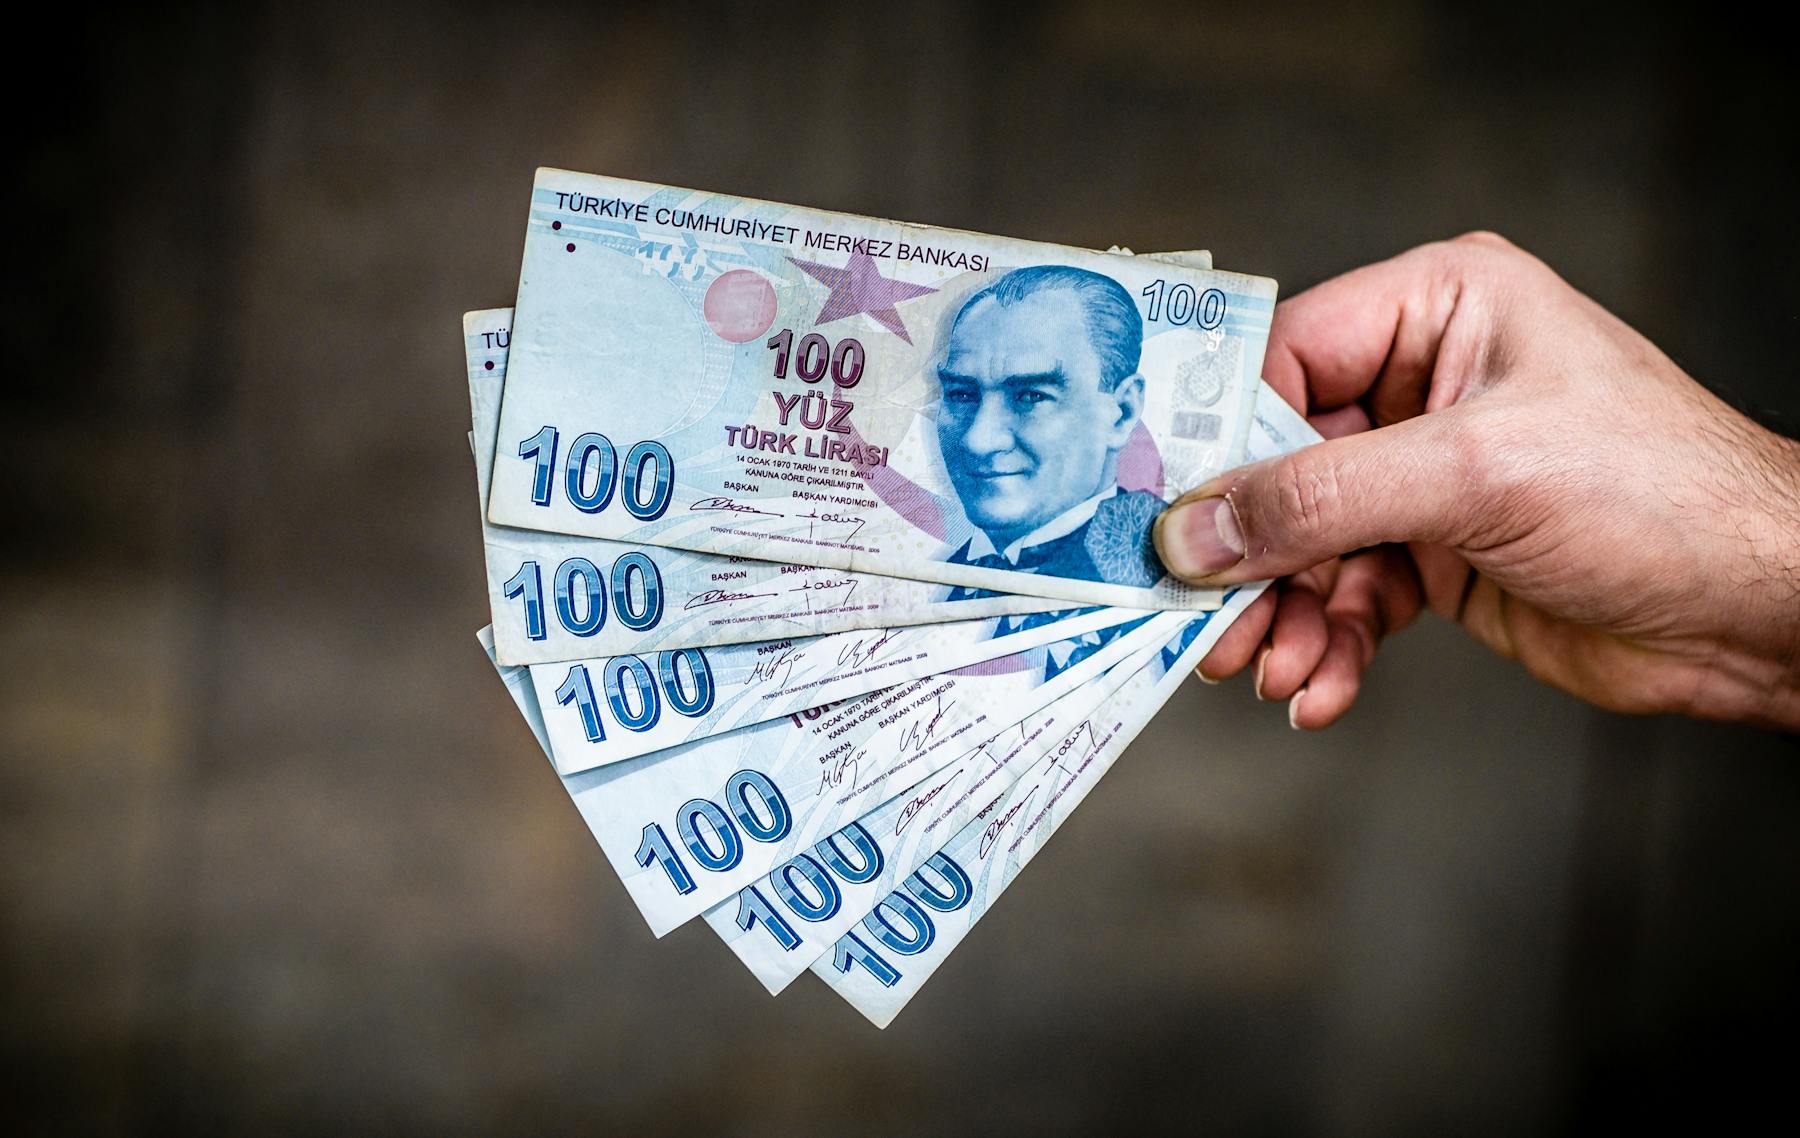 Man's hand holding 600 Turkish lira banknotes.